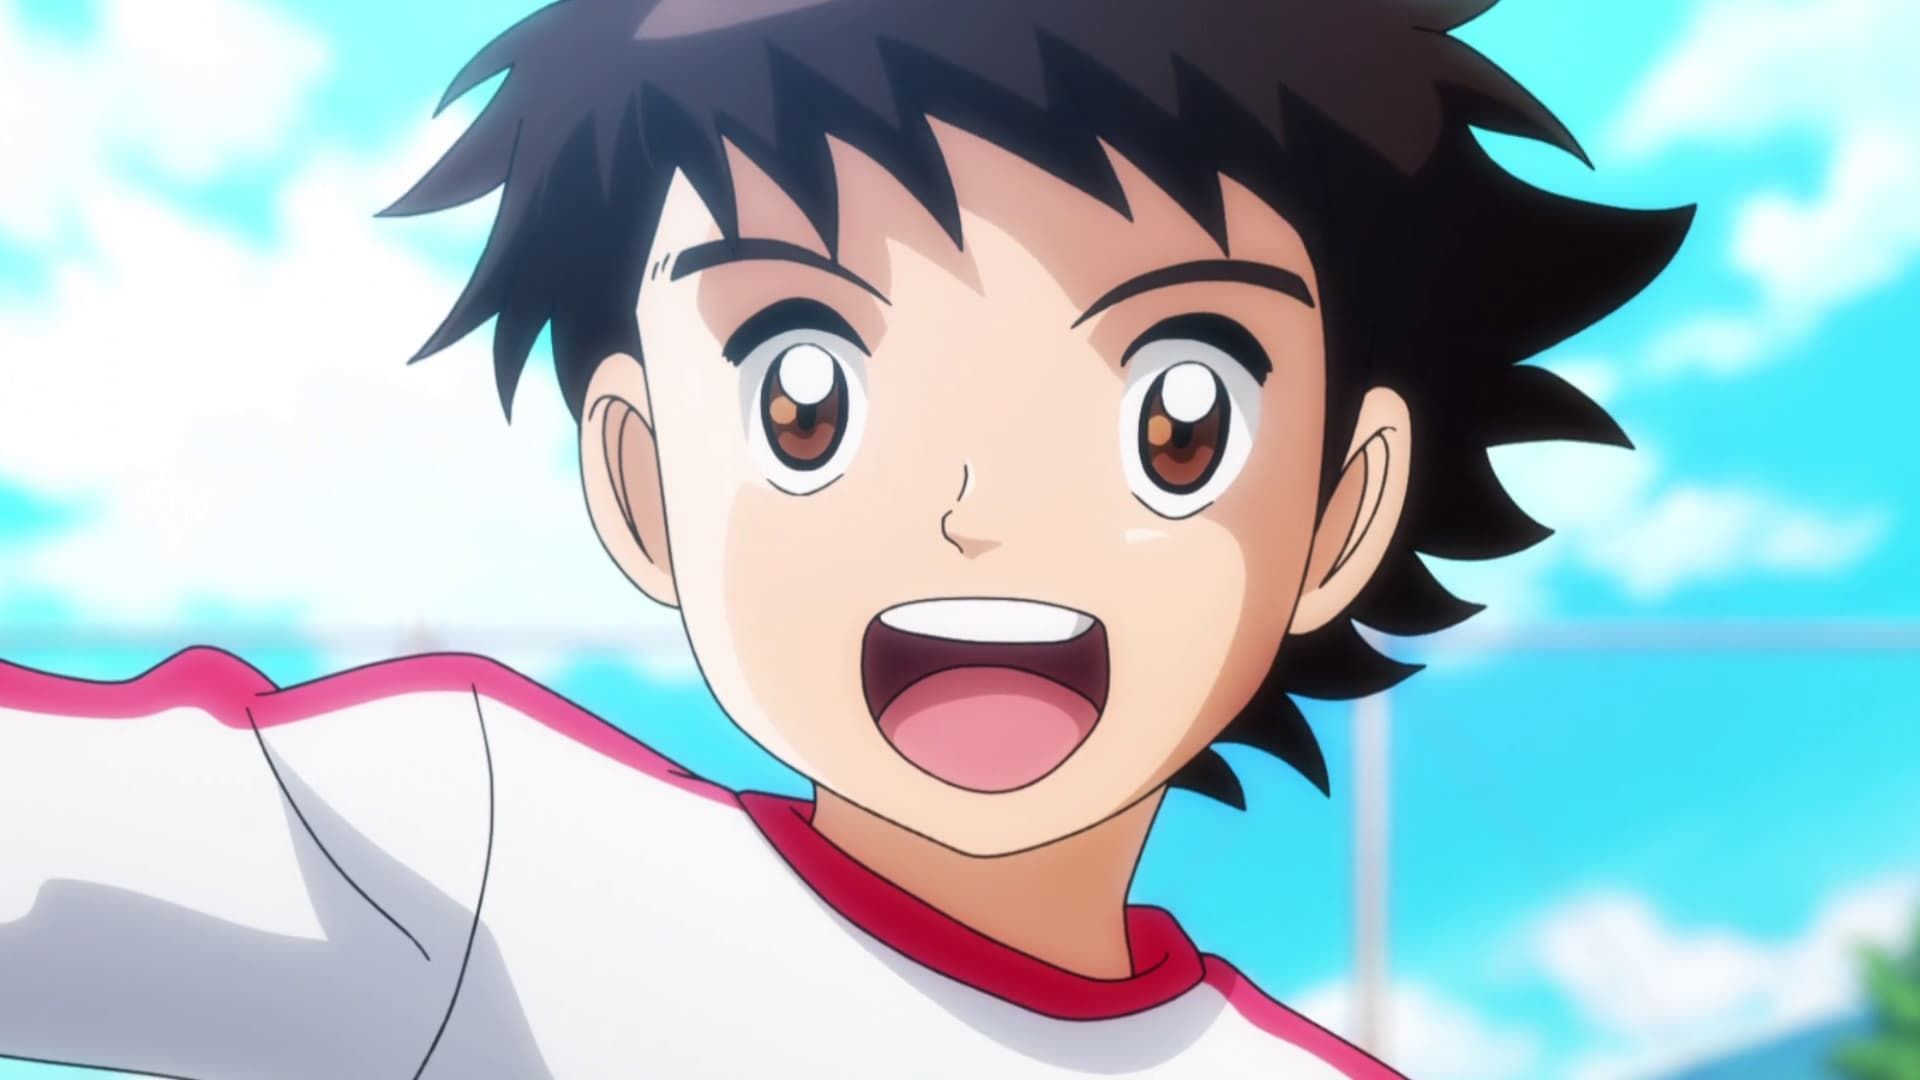 Watch Captain Tsubasa Season 1 Episode 1 - The new Soccer Star Online Now